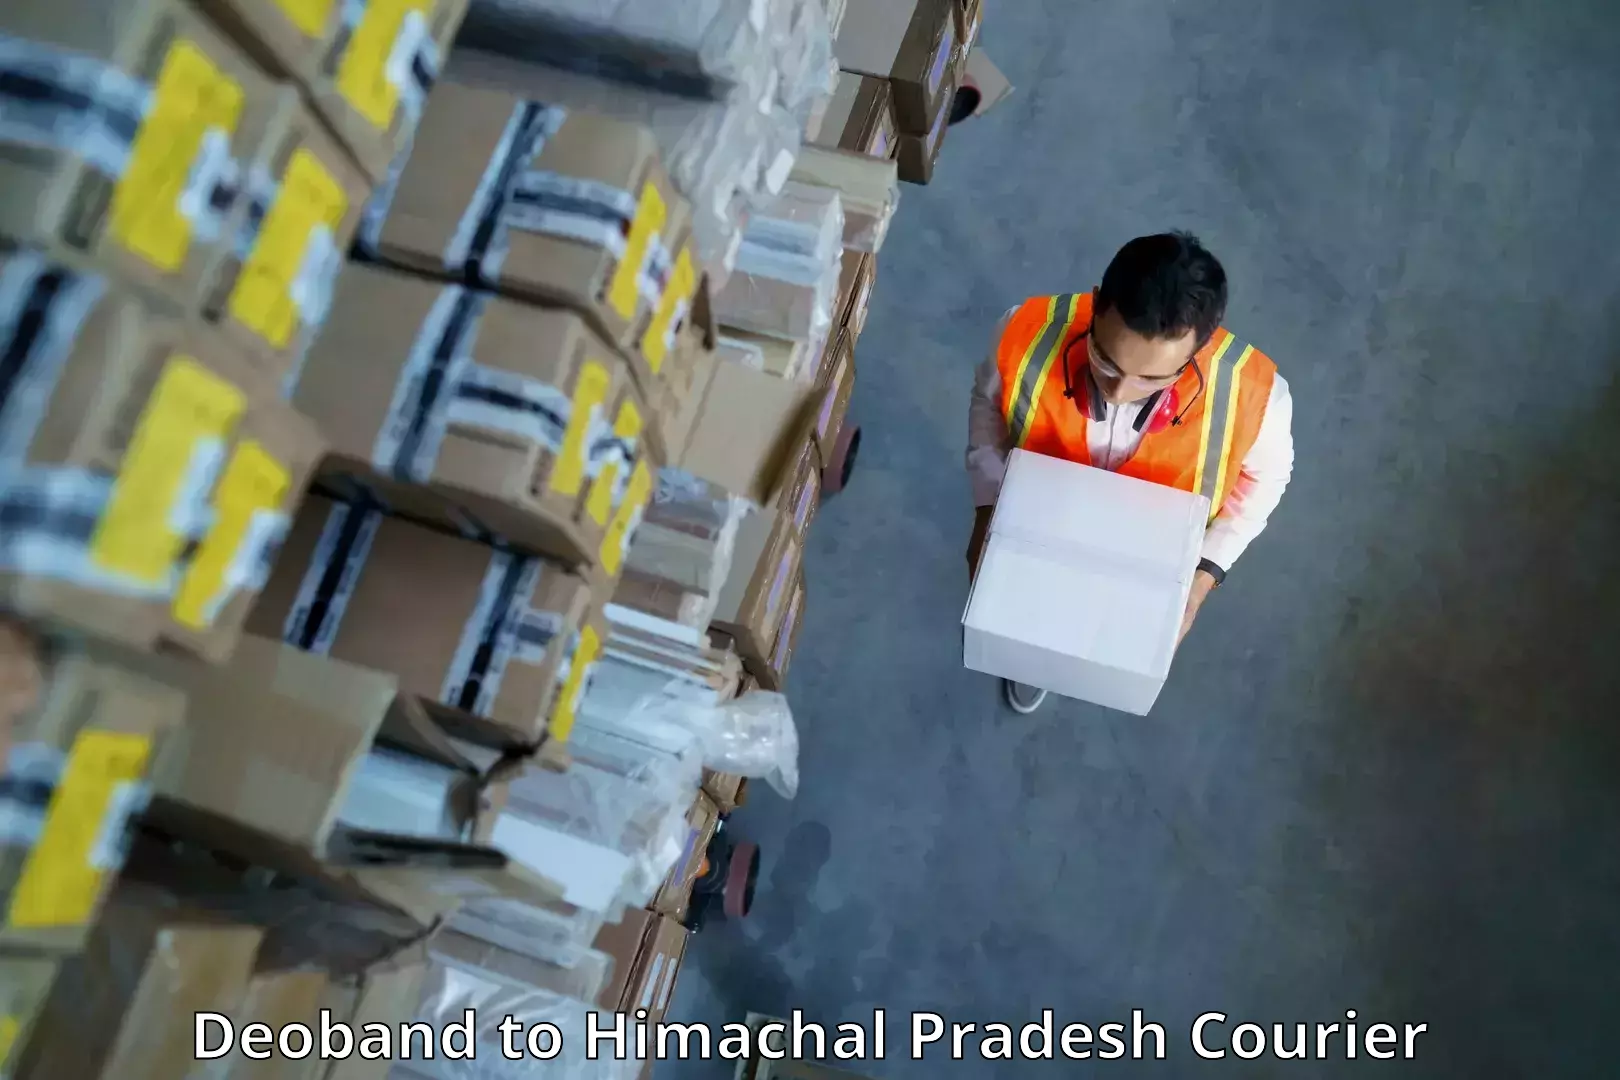 Professional courier handling Deoband to Himachal Pradesh